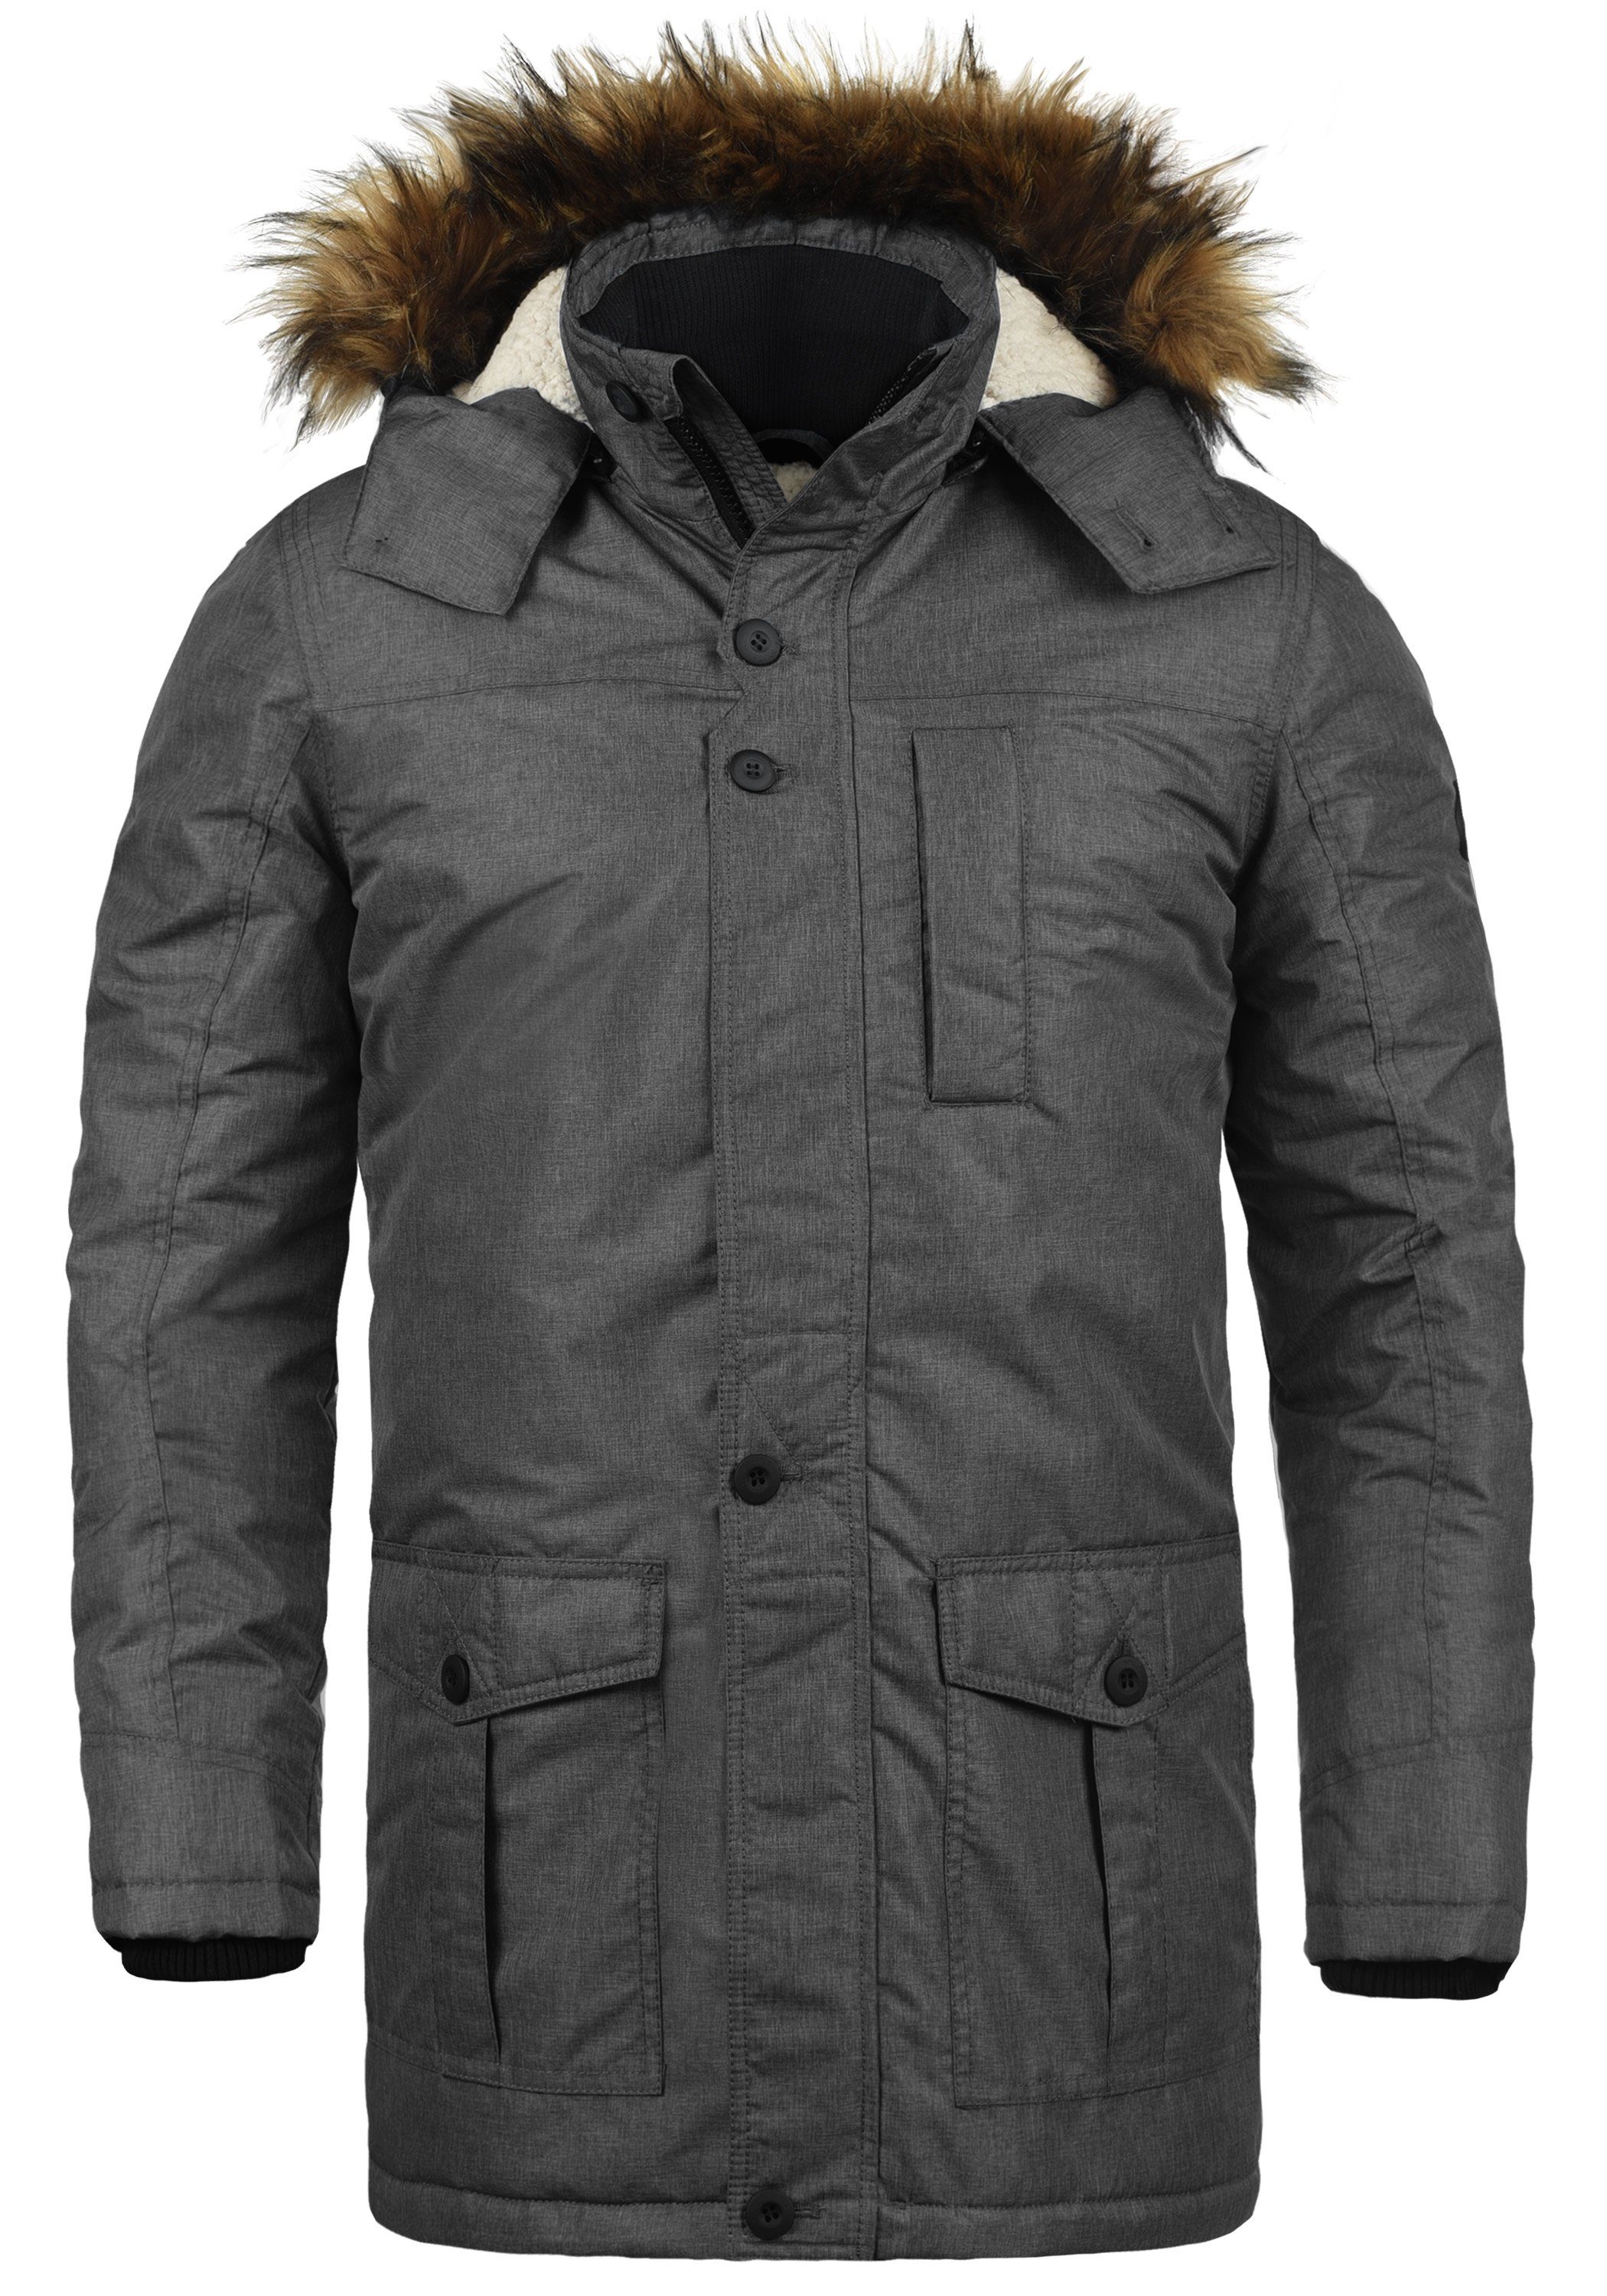 !Solid Winterjacke SDOctavus lange Jacke mit abnehmbarer Kapuze und Kunstfellkragen Black Melange (9000M)